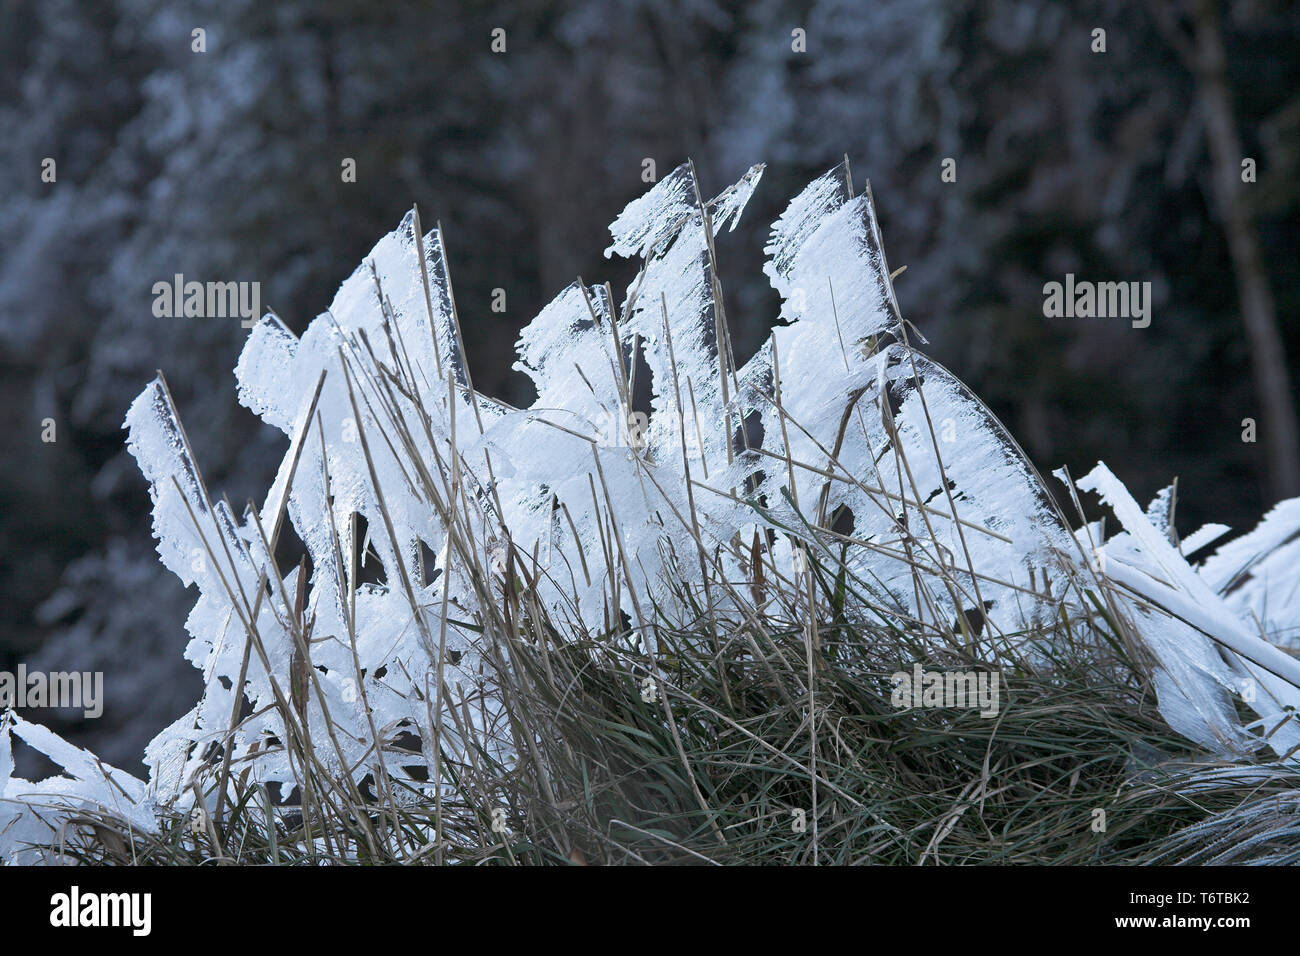 Hoar frost on vegetation Col de Rousset Parc Naturel Regional du Vercors France Stock Photo